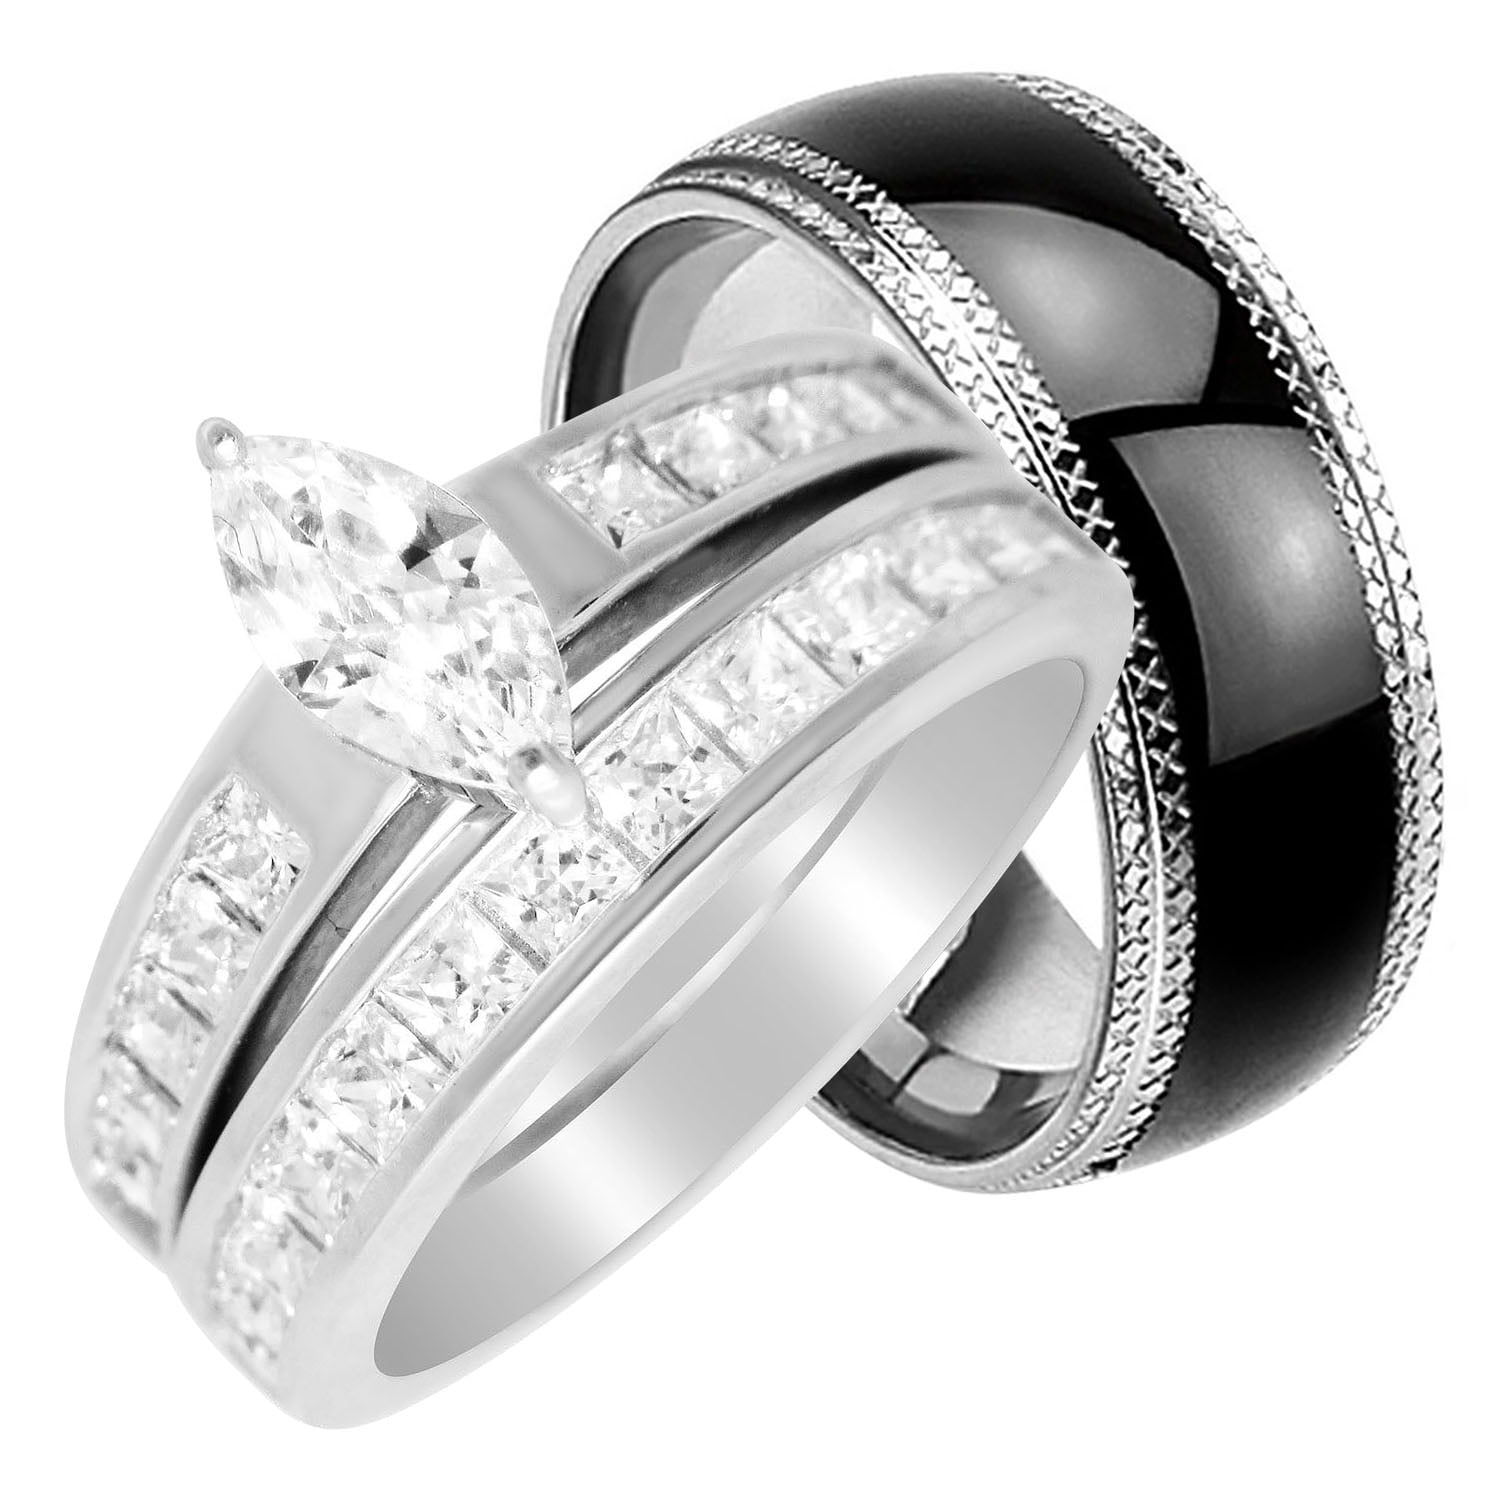 LaRaso & Co - His Hers Wedding Rings Set Cheap Matching Wedding Bands ...